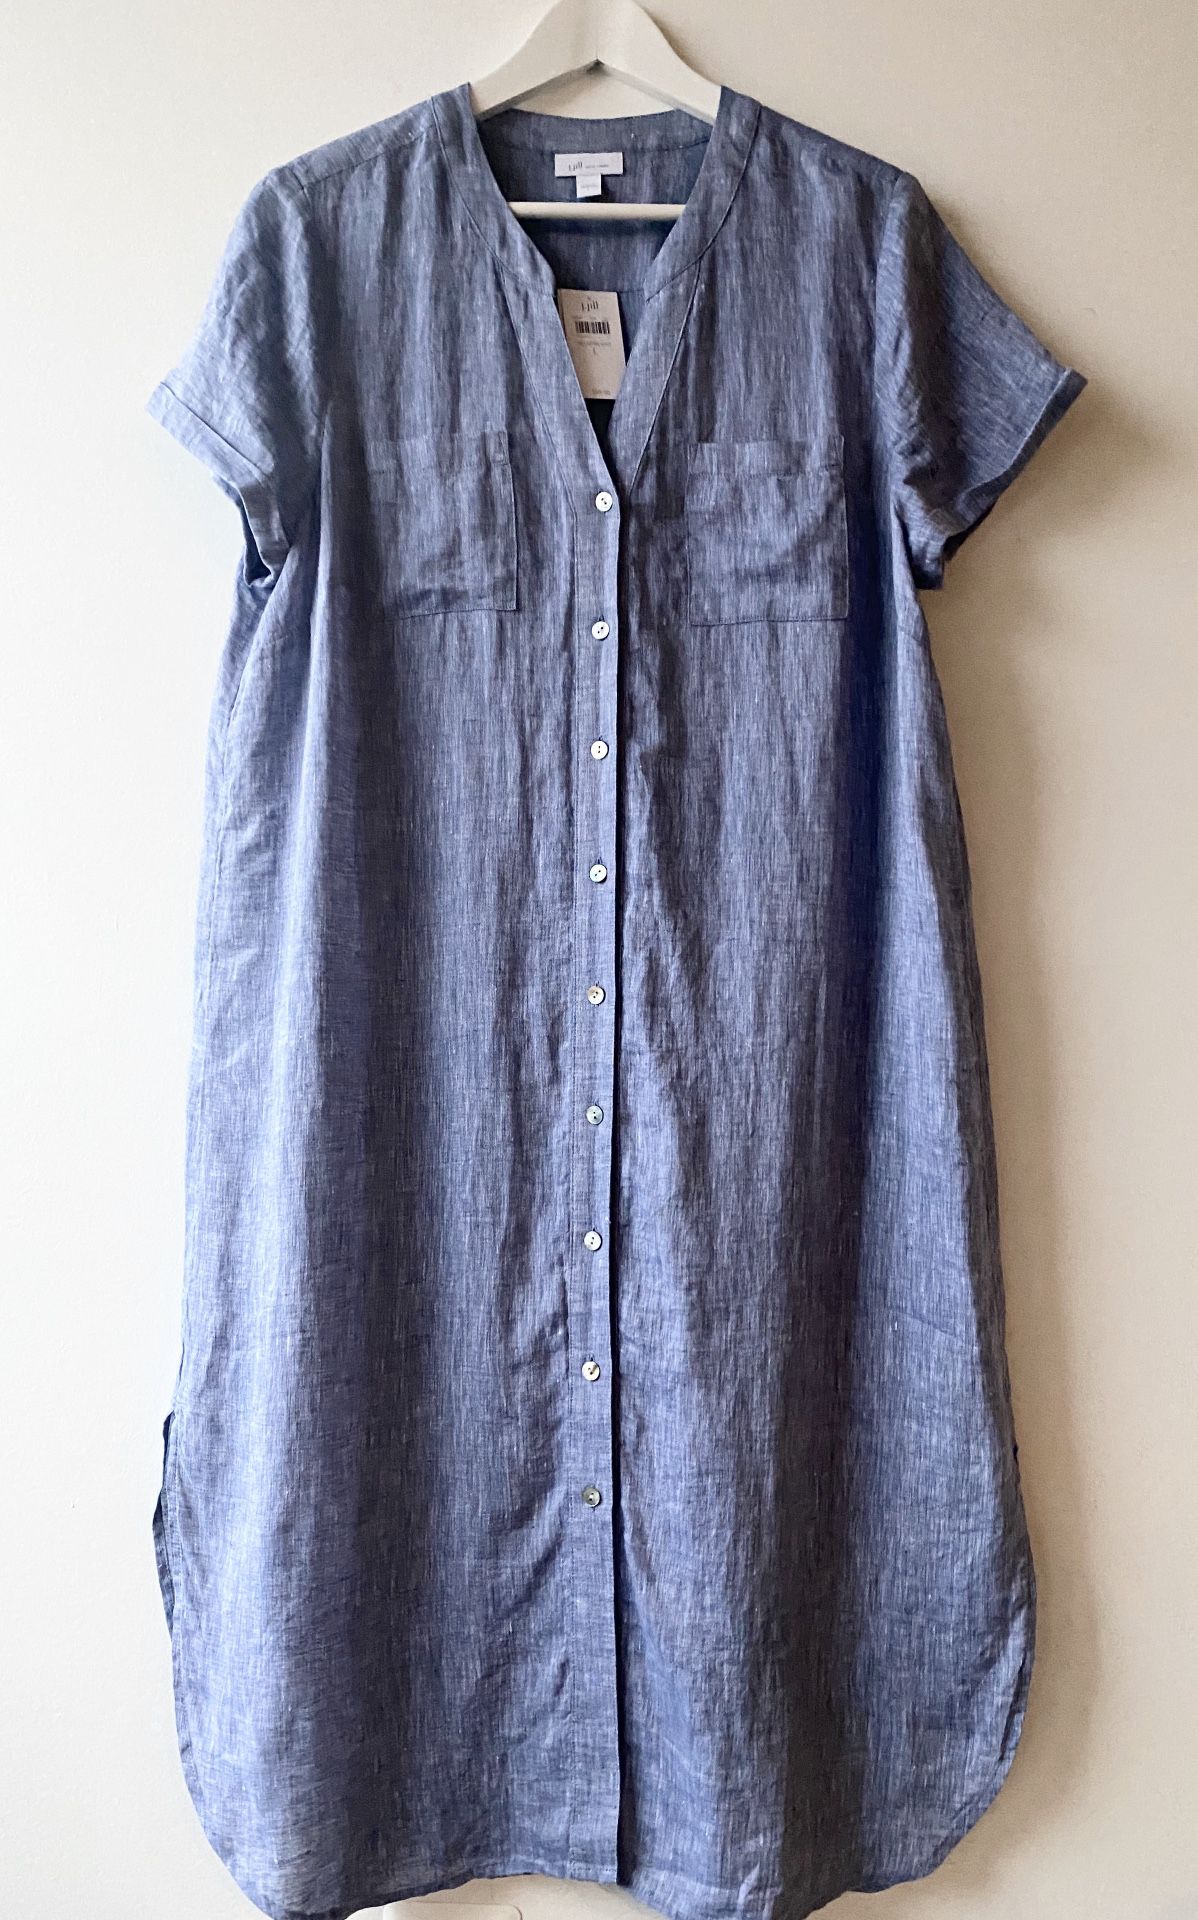 J Jill Linen Shirttail Longline Tunic Shirt Dress NWT Size Large - Retail $99 *Reduced